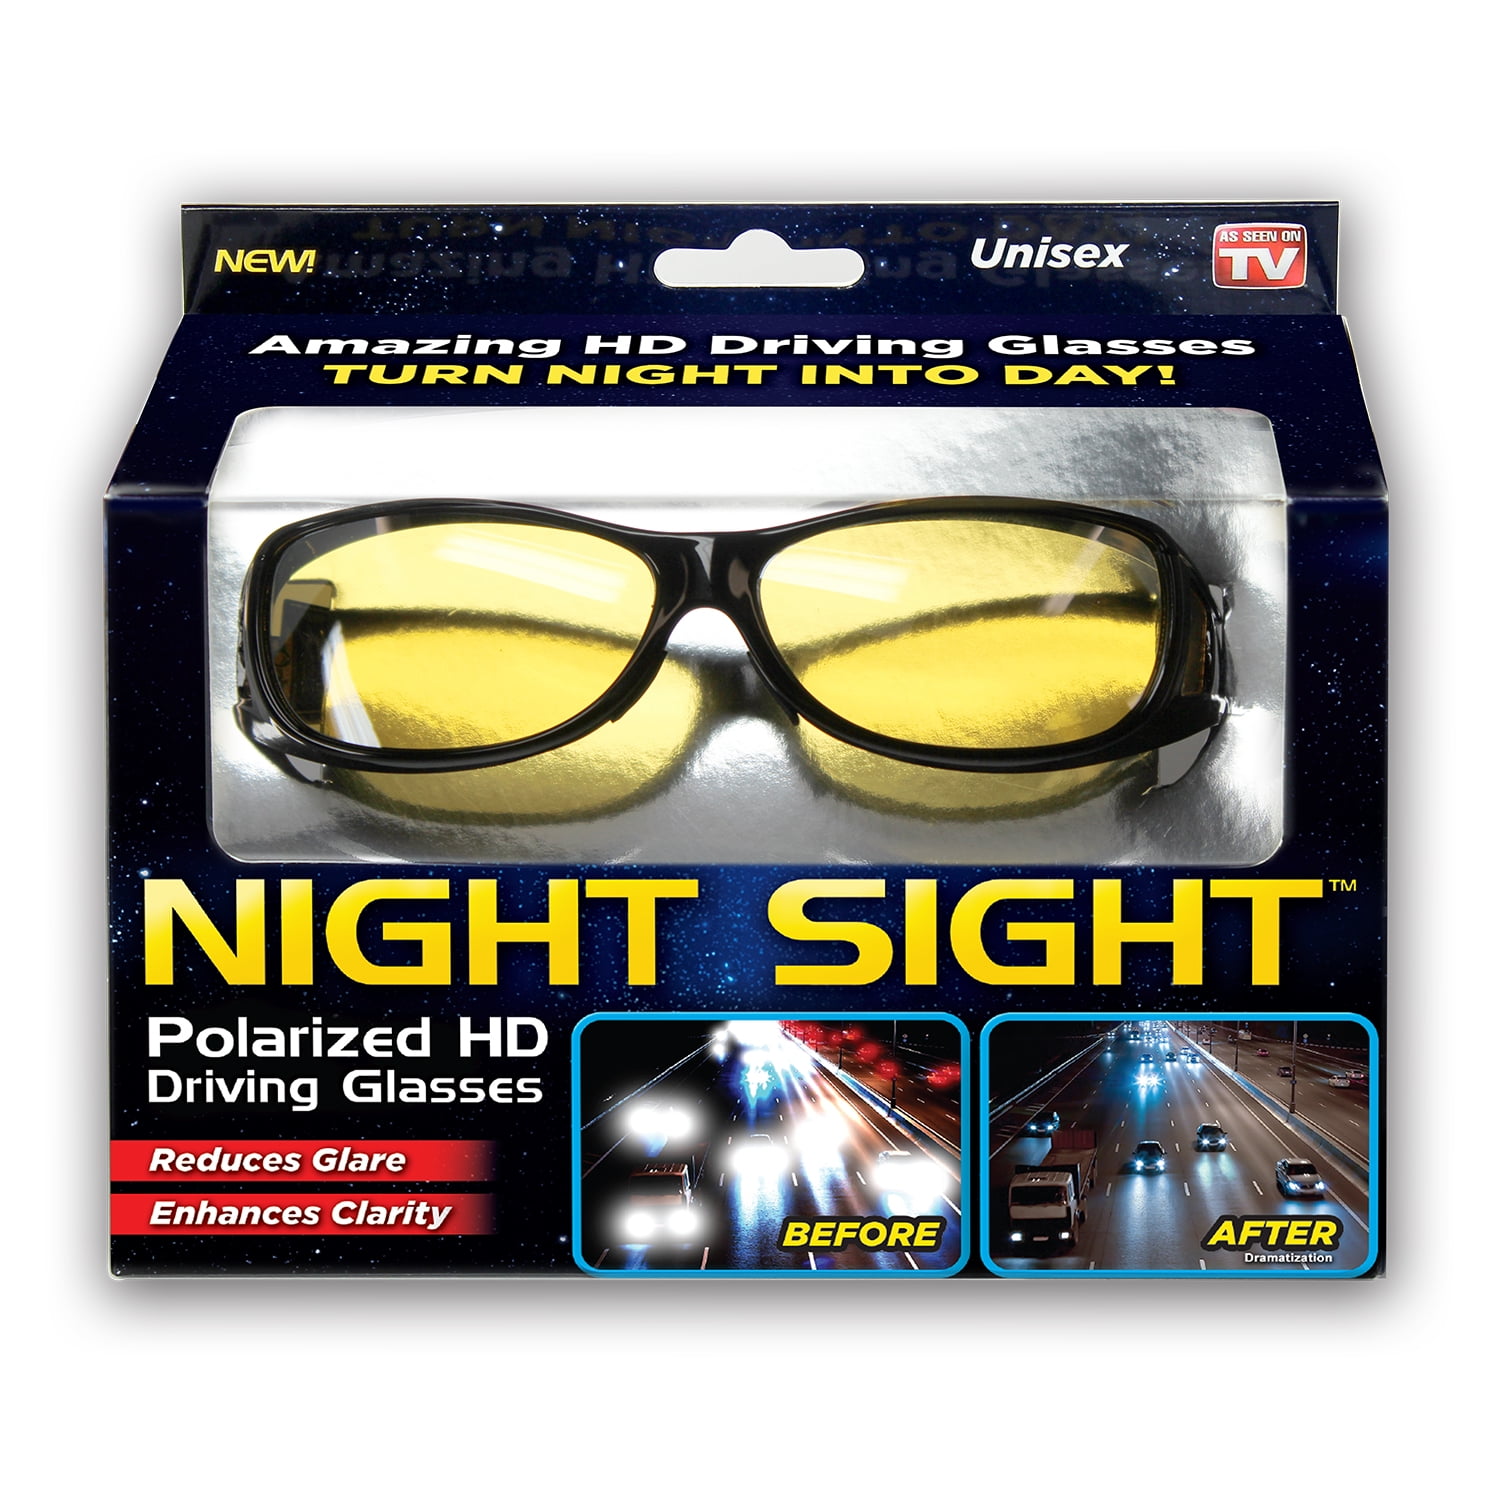 Wrap Around Prescription Glasses Black Frame Polarized Night Vision Glasses HD